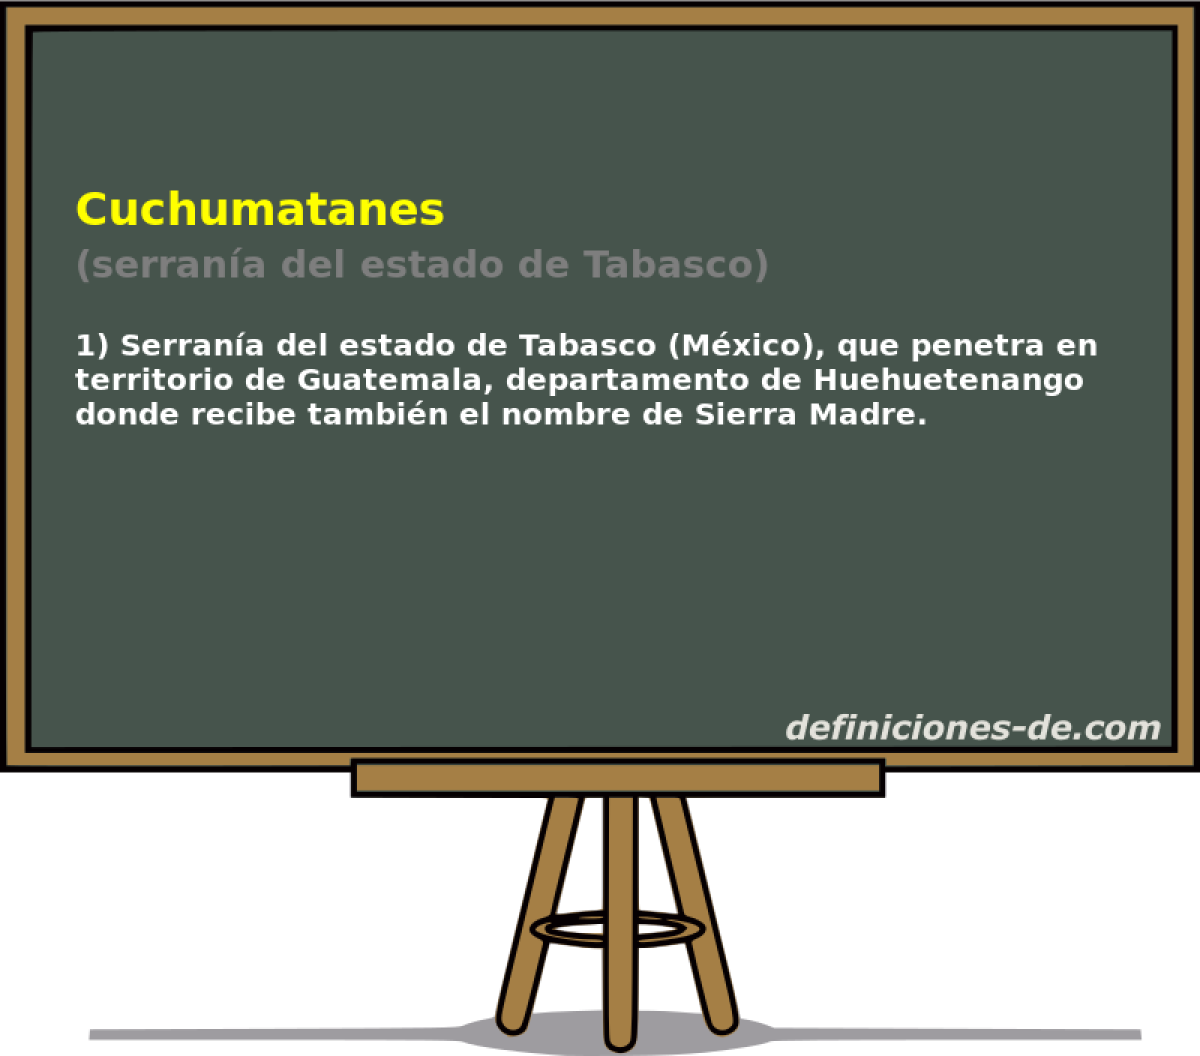 Cuchumatanes (serrana del estado de Tabasco)